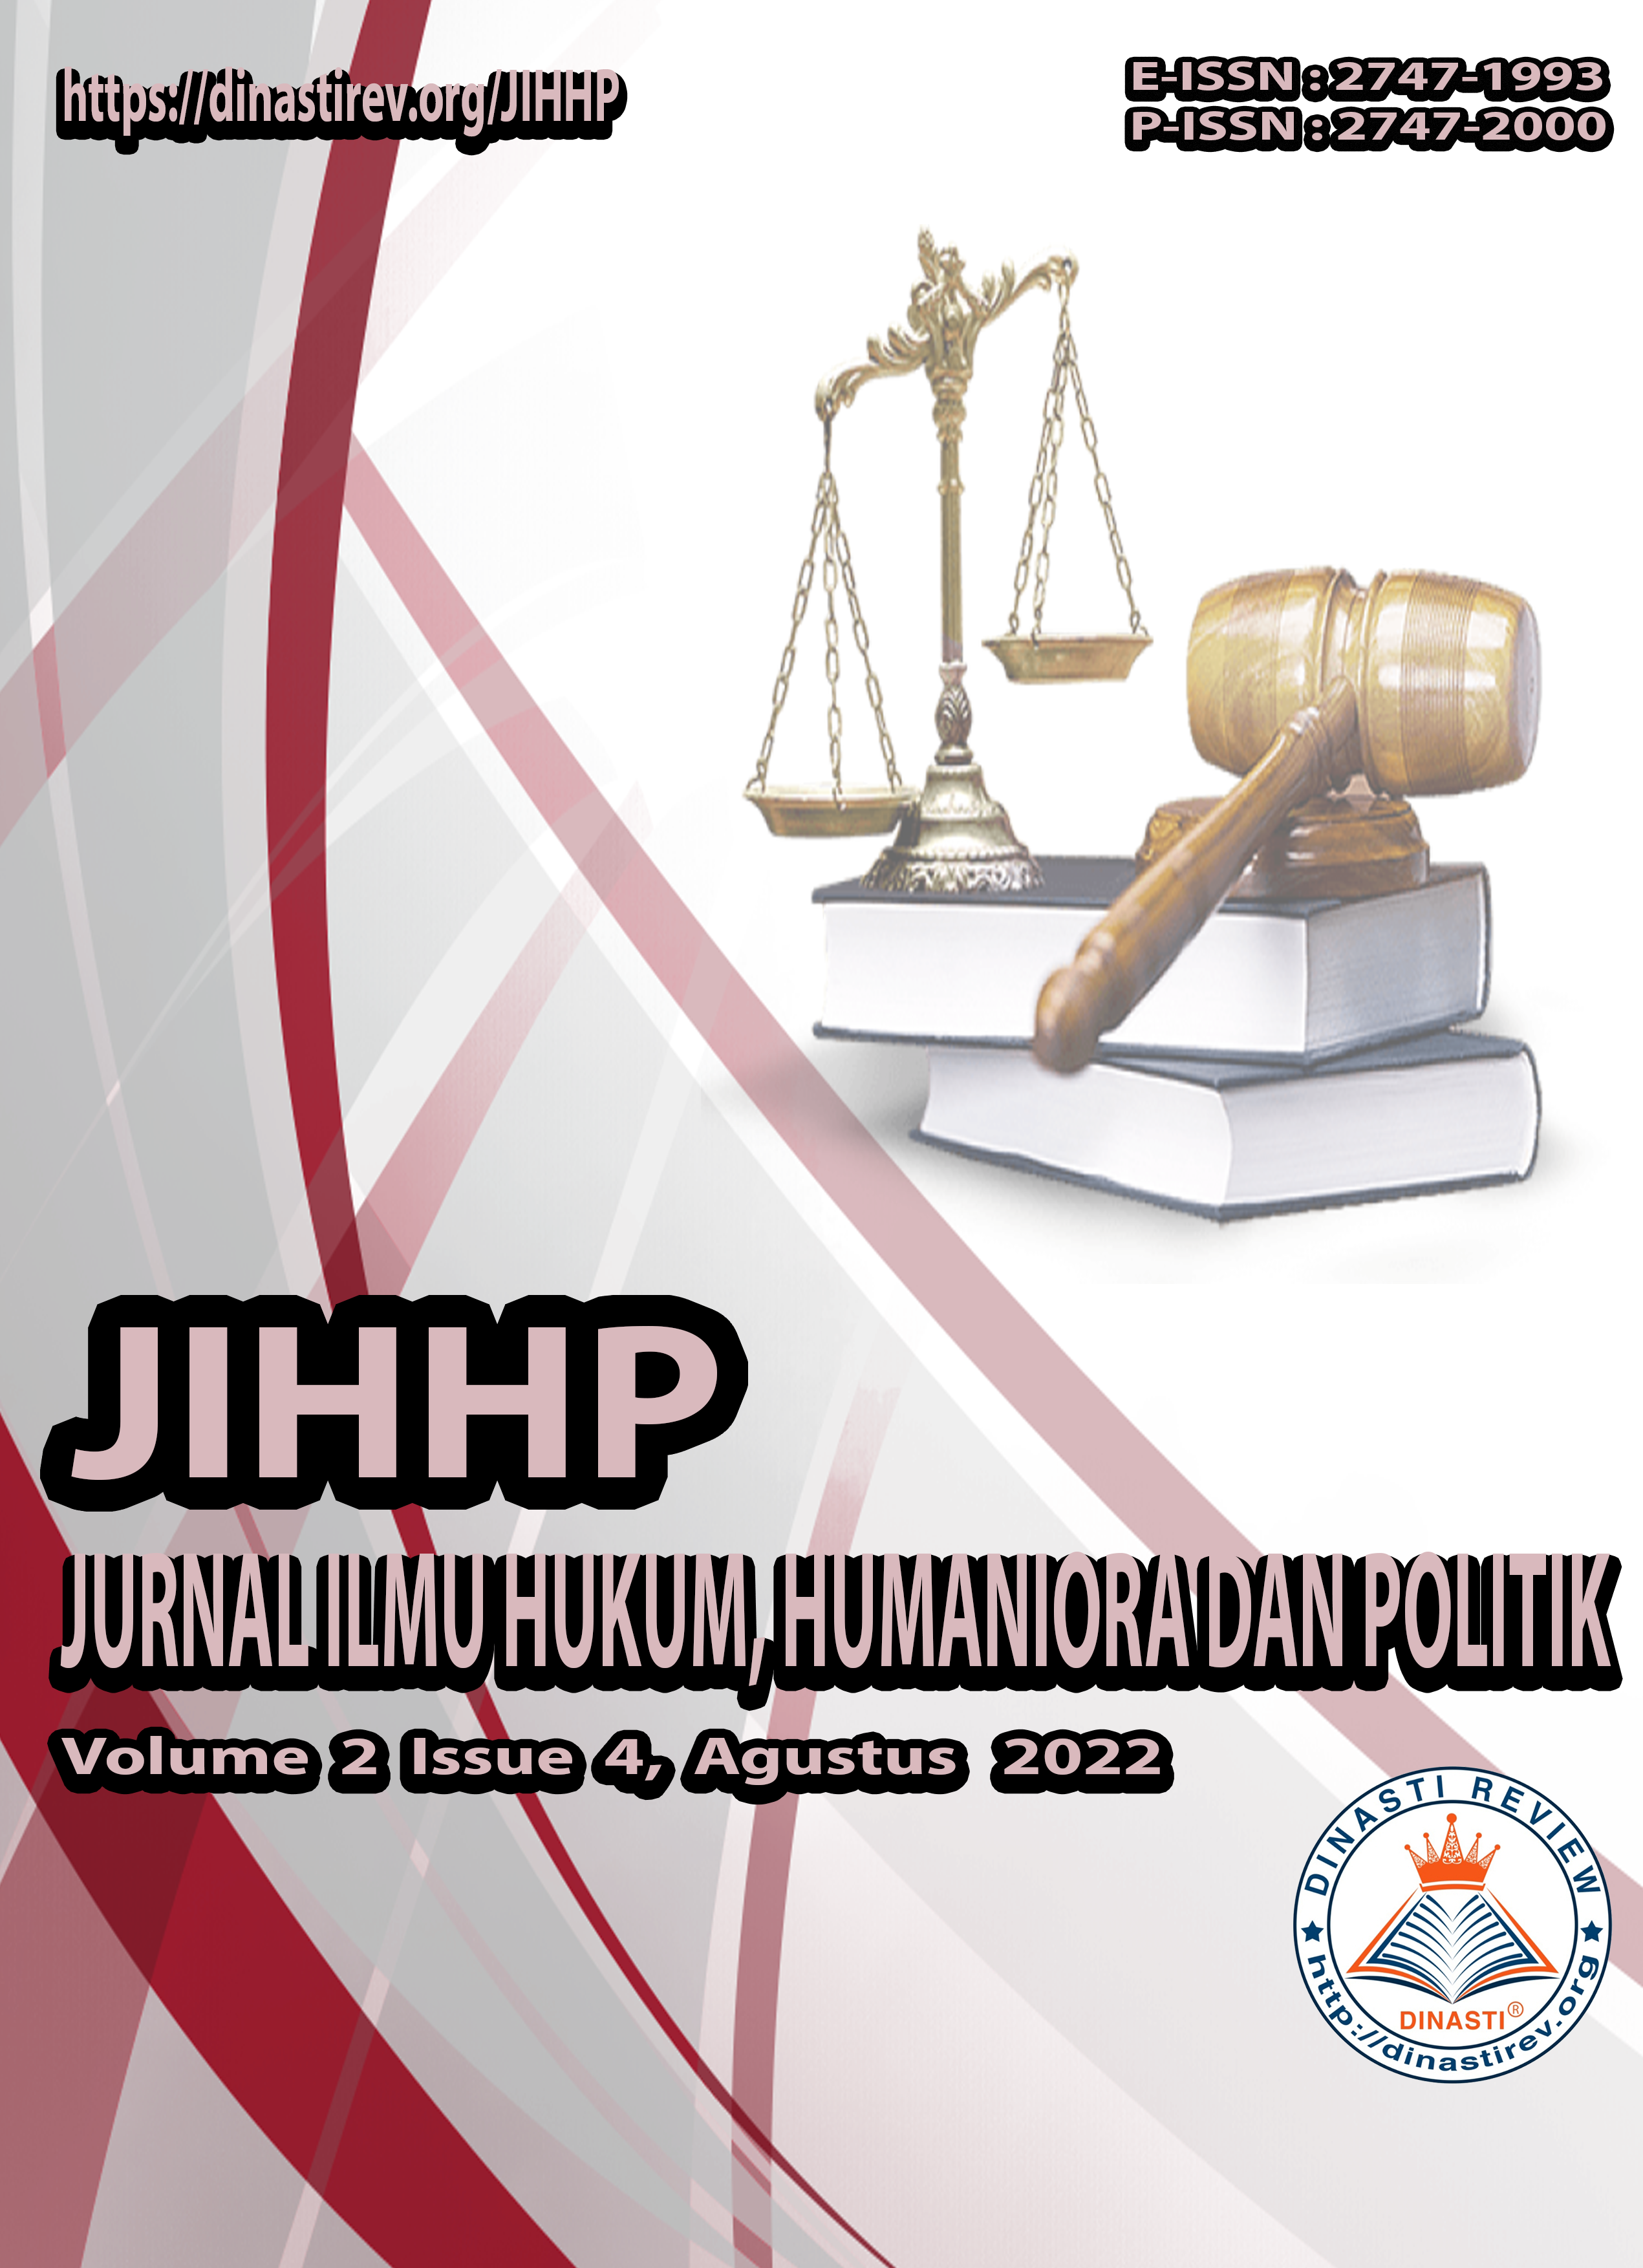 					View Vol. 2 No. 4 (2022): (JIHHP) Jurnal Ilmu Hukum, Humaniora dan Politik (Agustus 2022) 
				